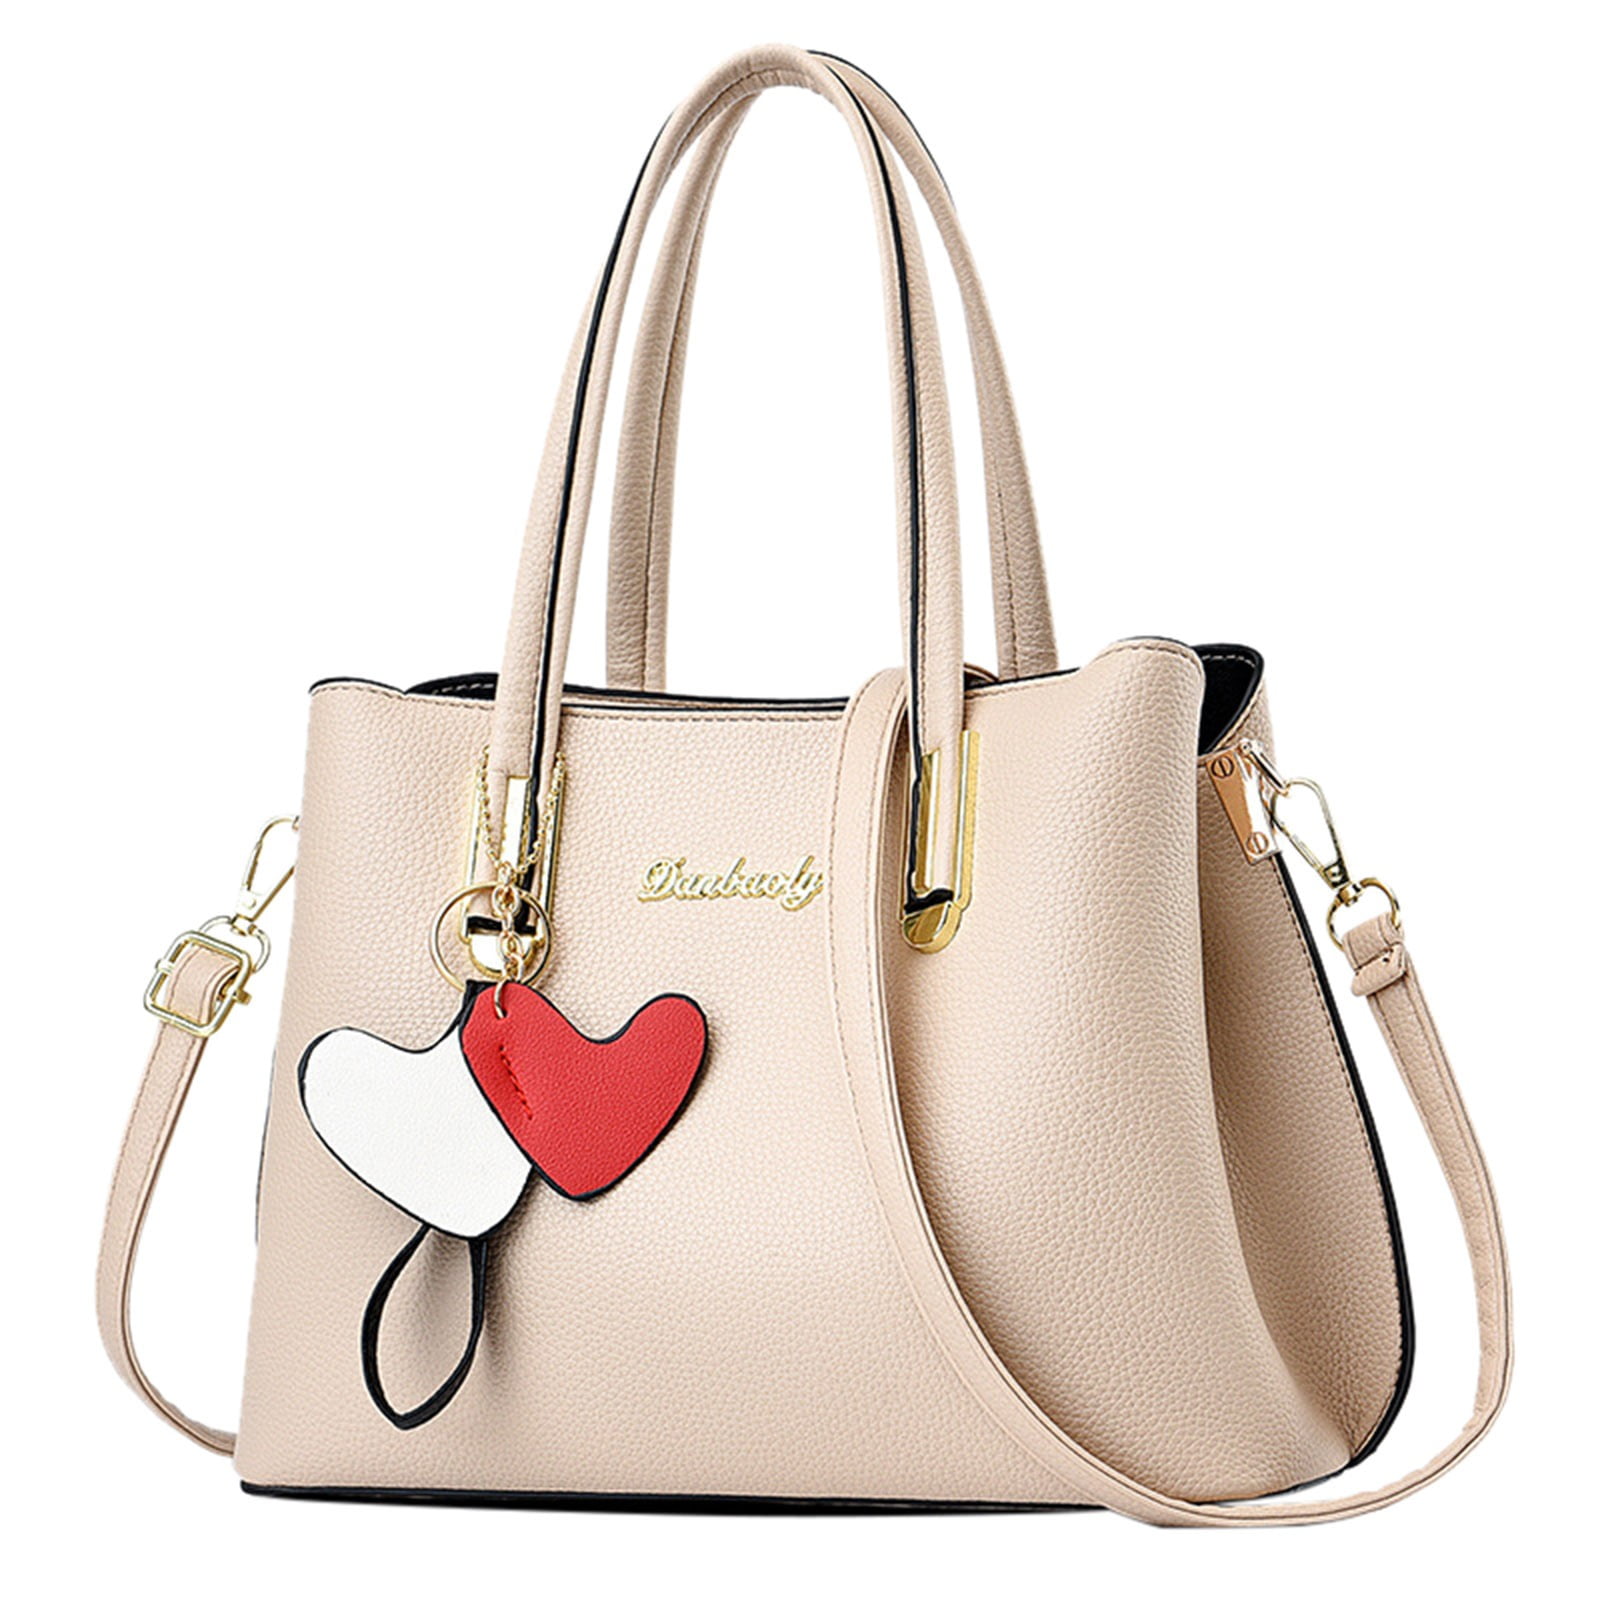 cute purses Small Purses Teen Girls Coin Purse Girls crossbody bag | eBay